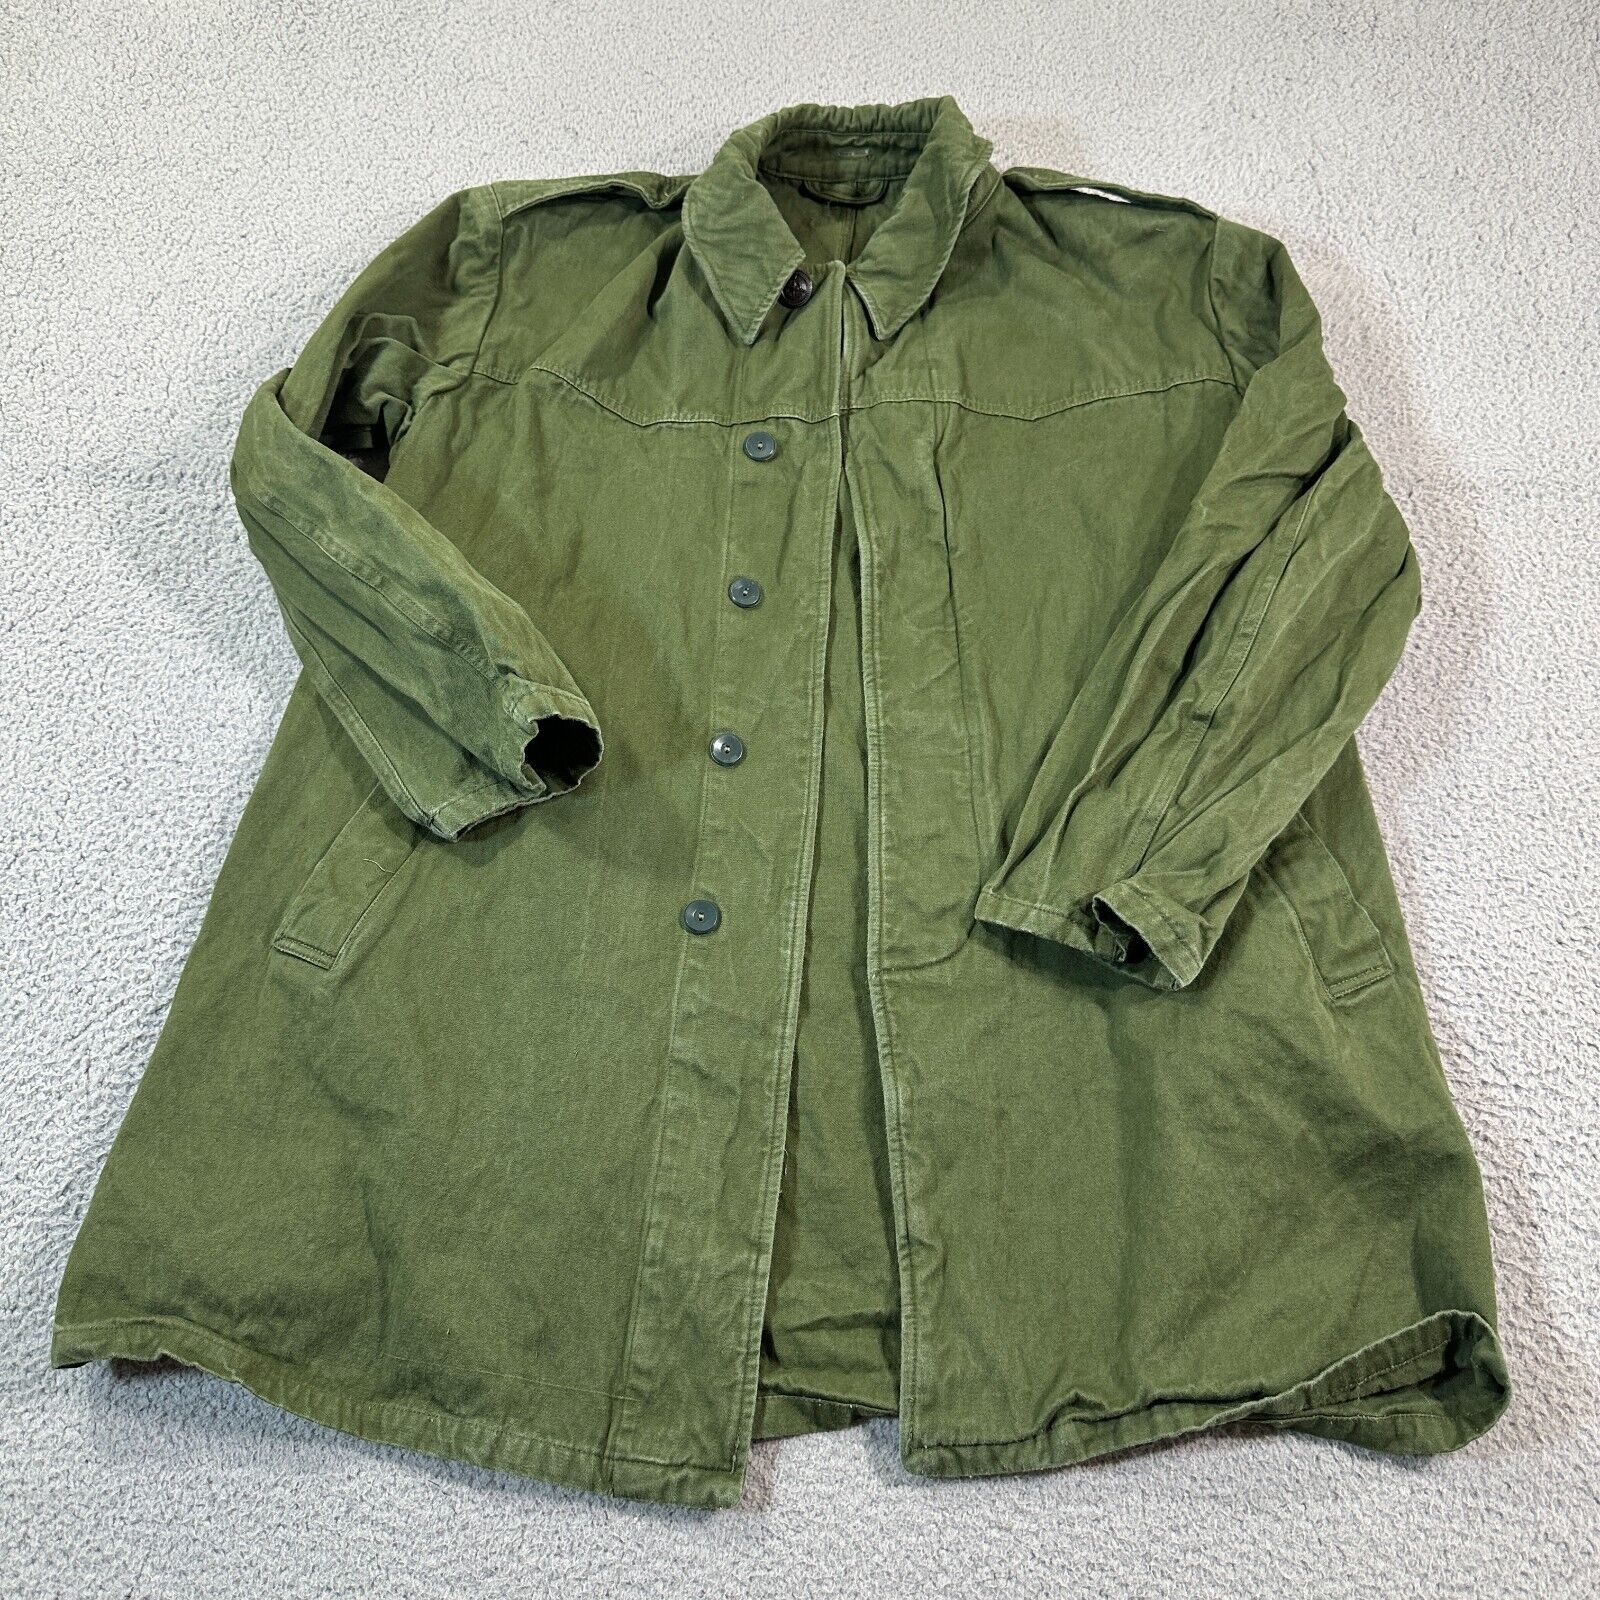 Vintage 60s 50s Olive Military Jacket coat men adult size 50E 23x32